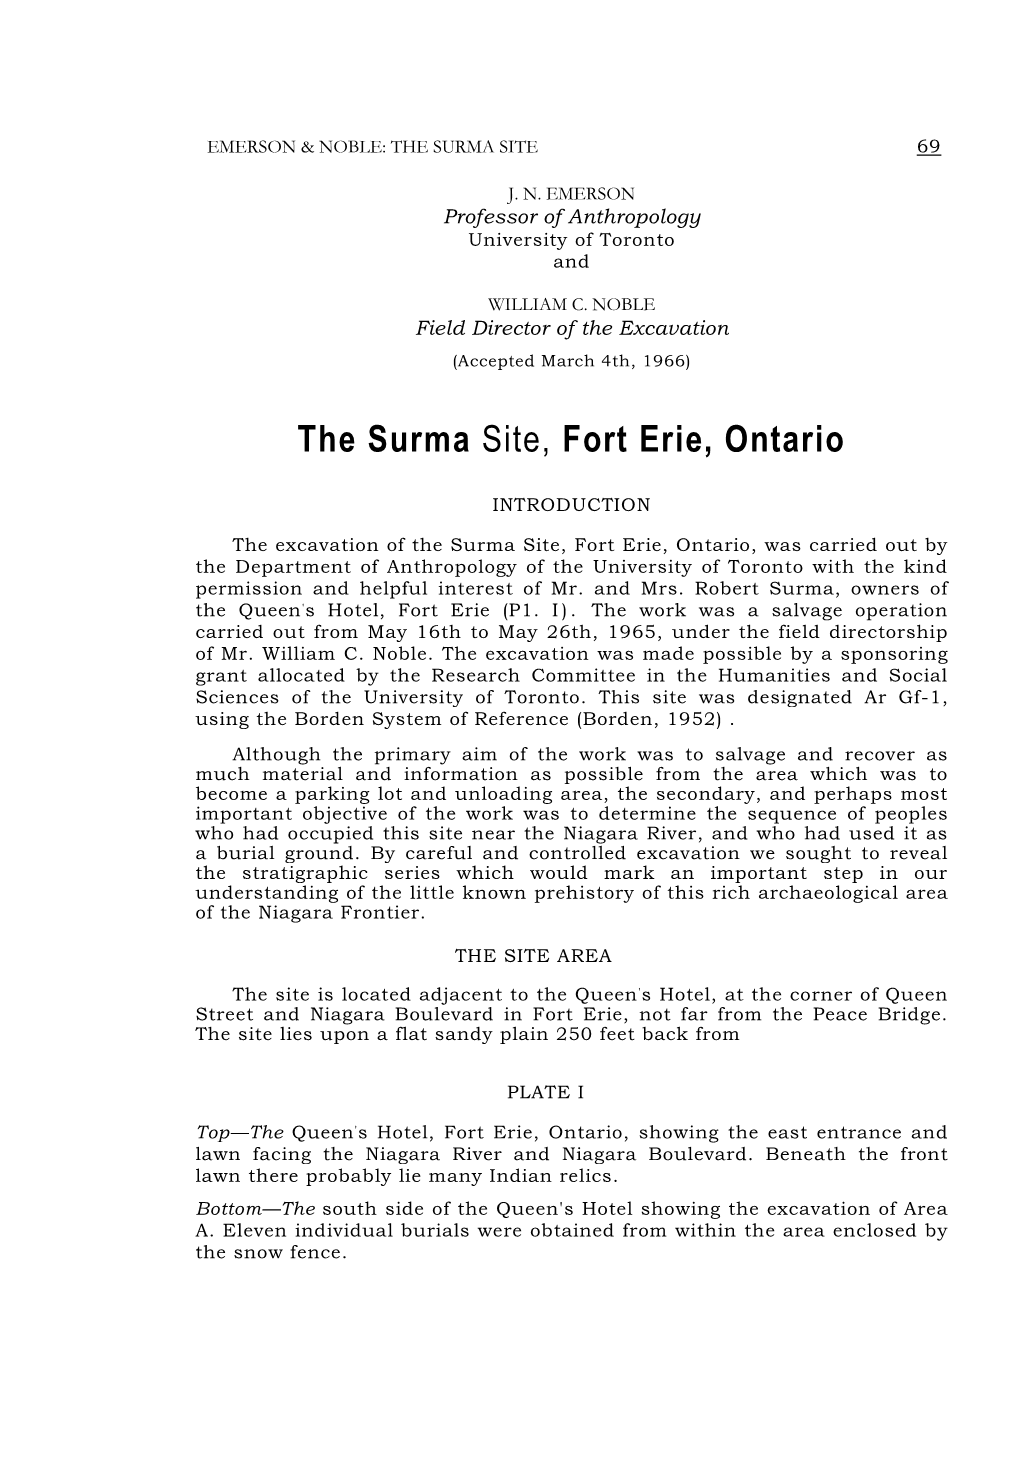 The Surma Site, Fort Erie, Ontario